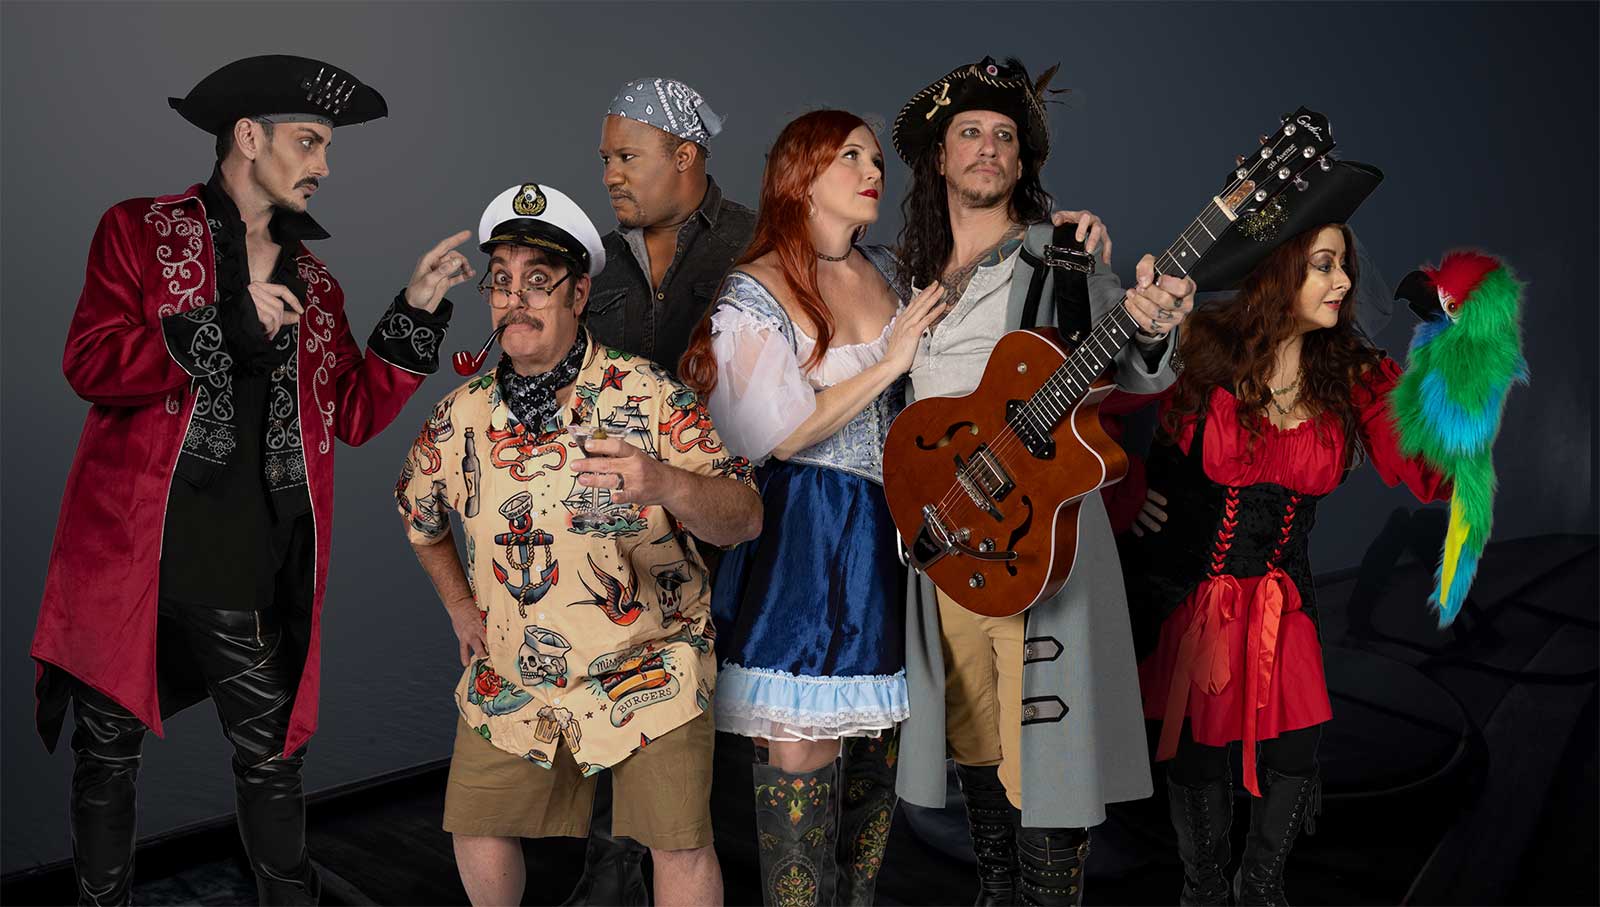 A Pirate's Life cast photo